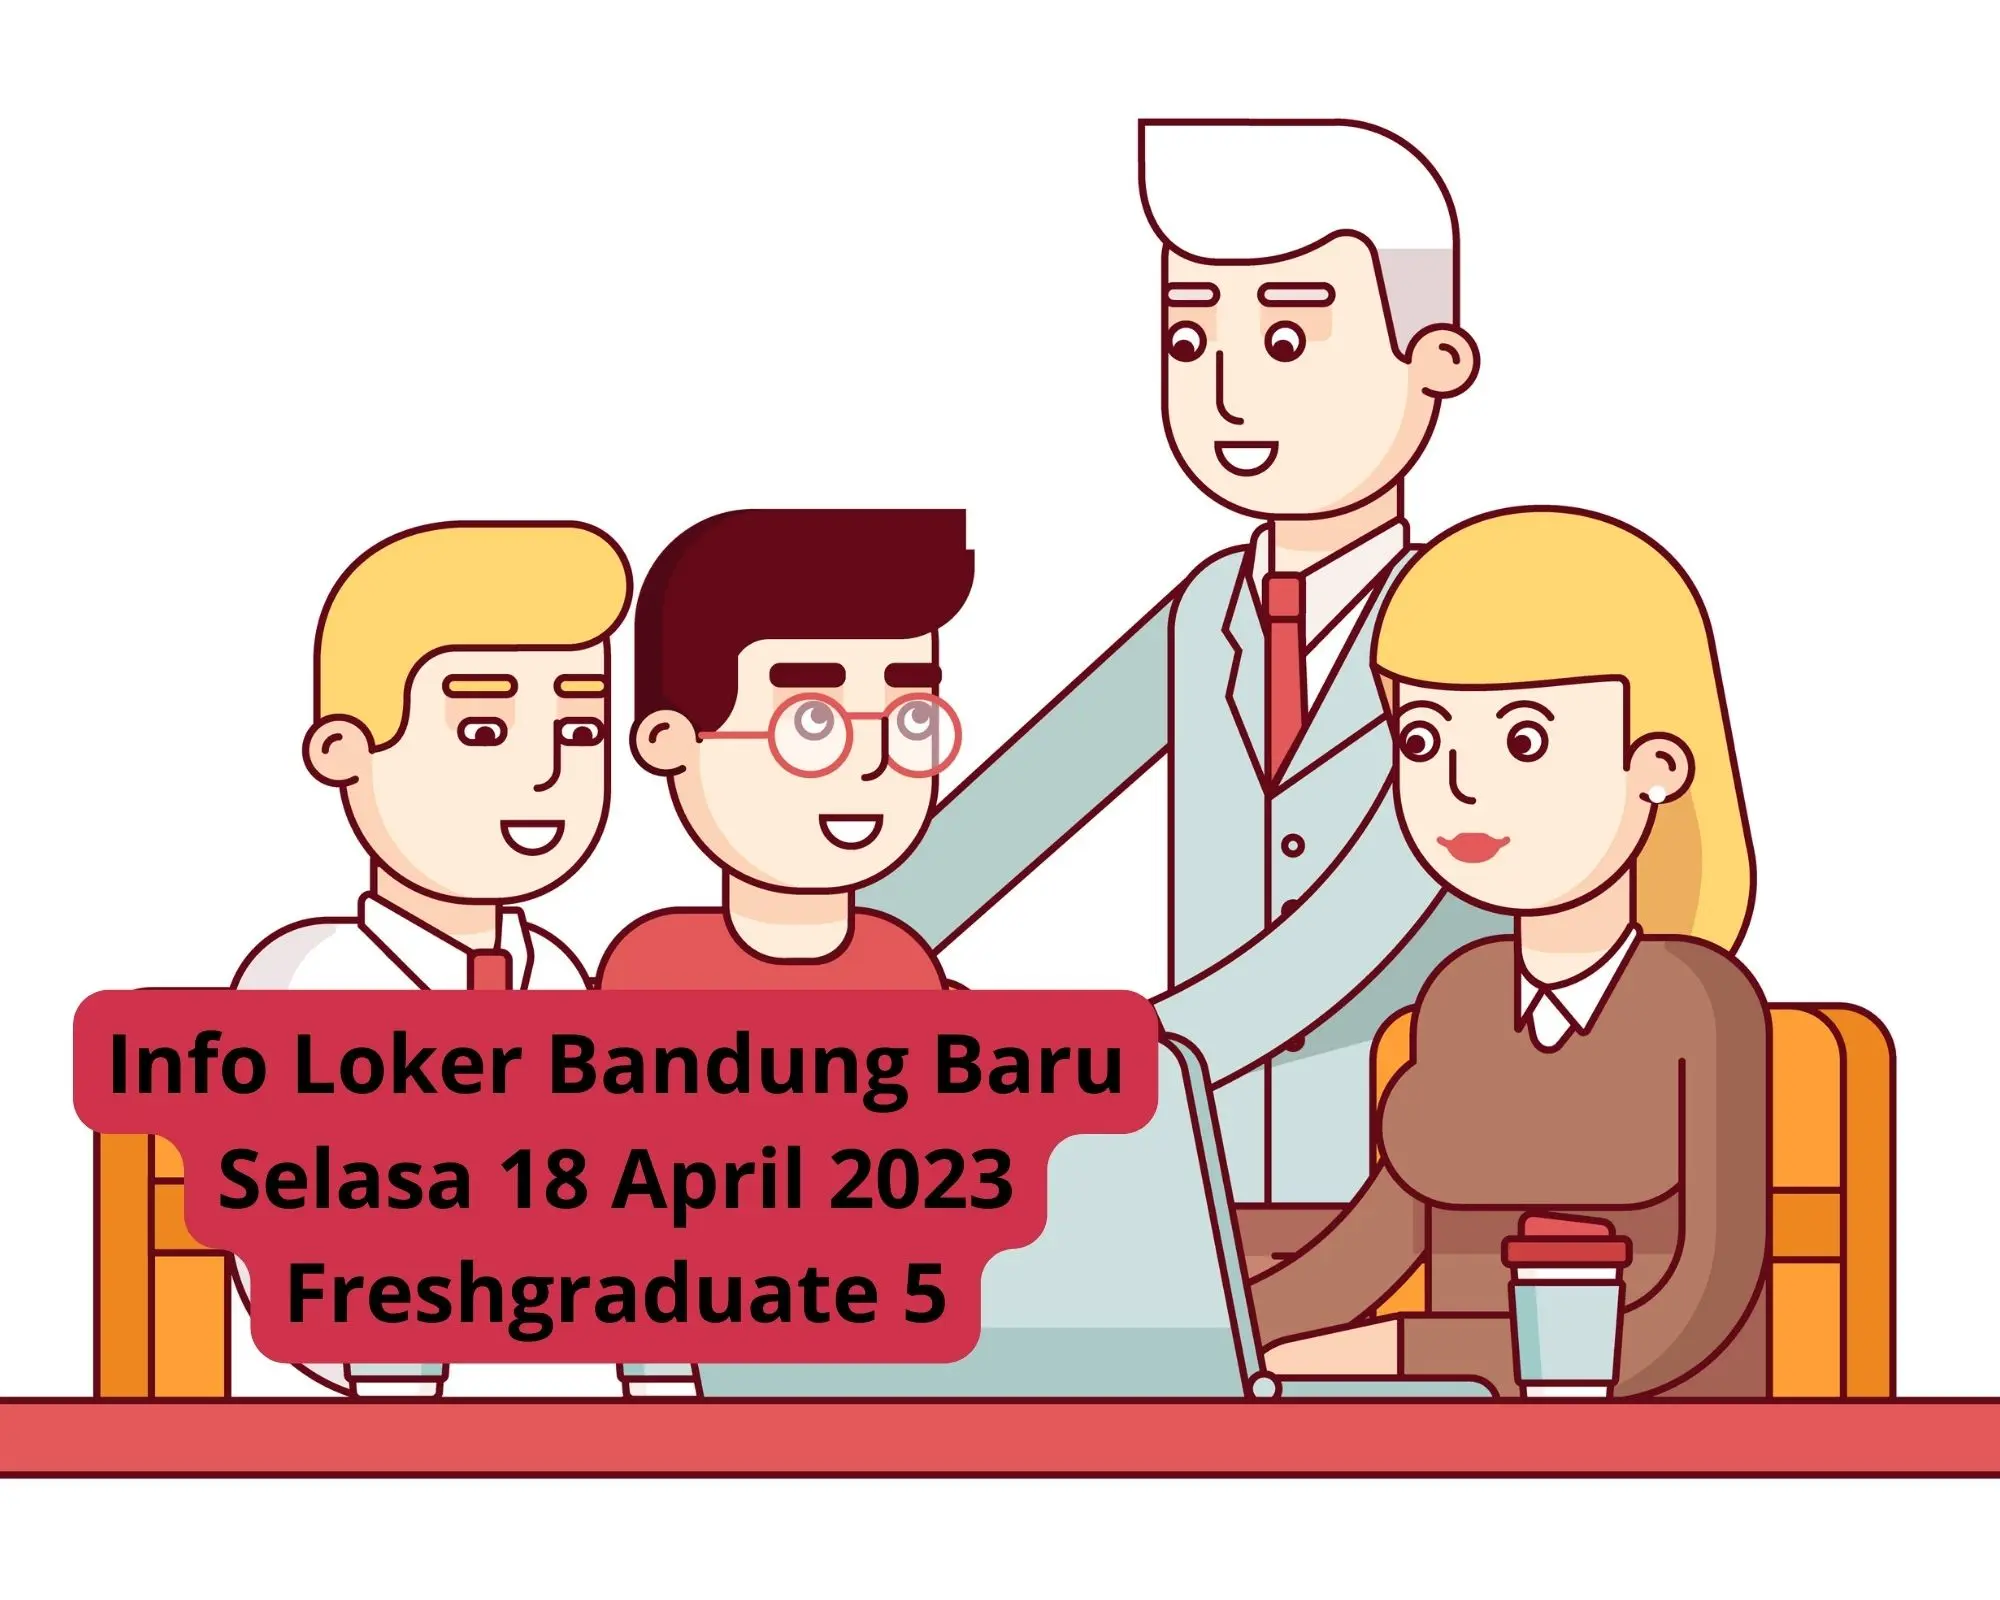 Info Loker Bandung Baru Selasa 18 April 2023 Freshgraduate 5